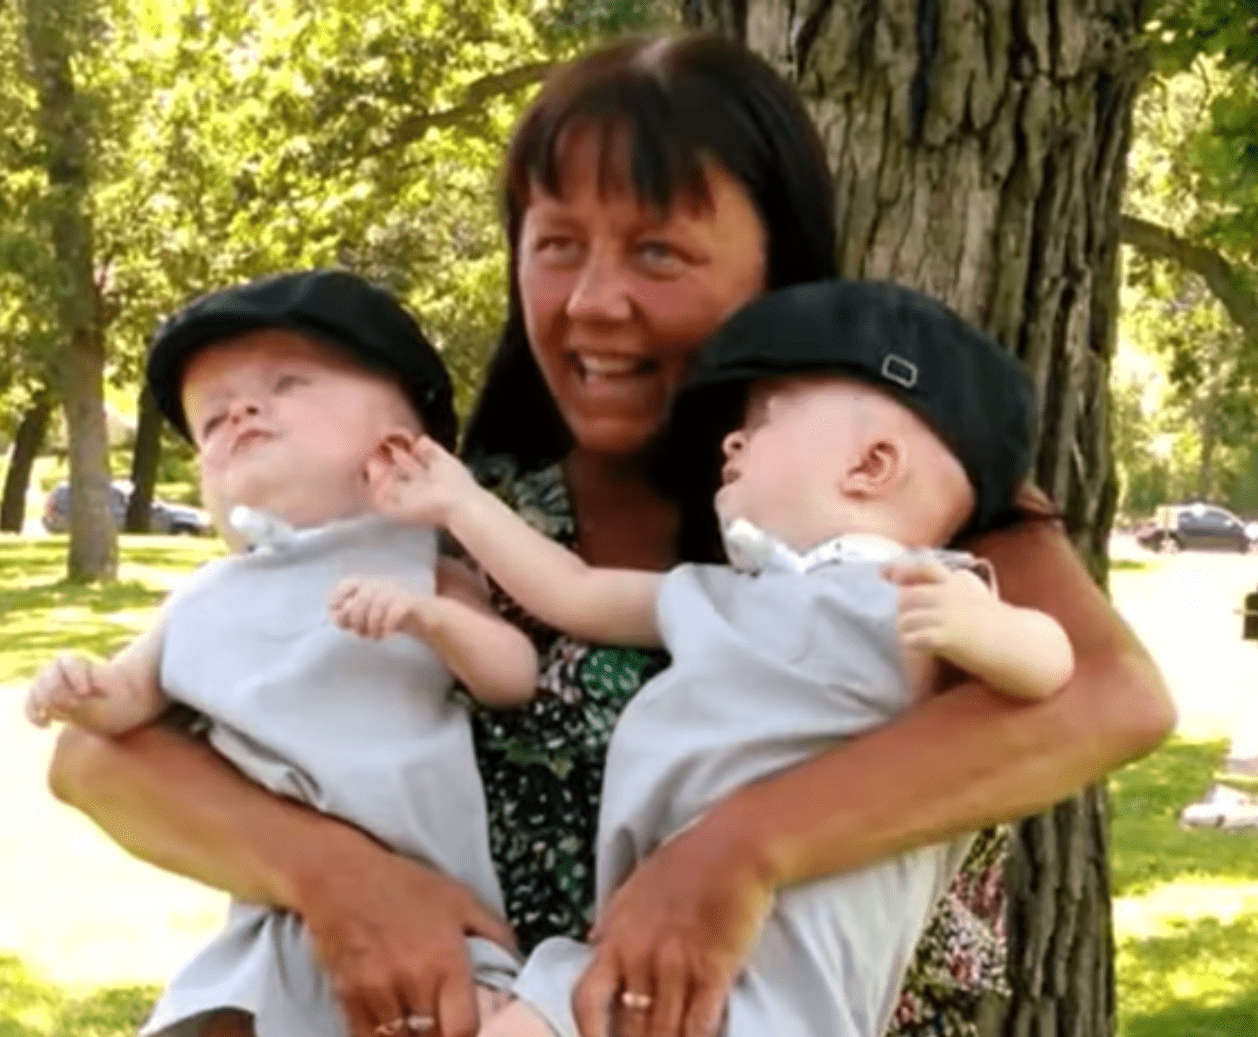 Linda Trepanier with 3 year old twins Matthew and Marshall Trepanier.  Source: youtube.com/Inside Edition